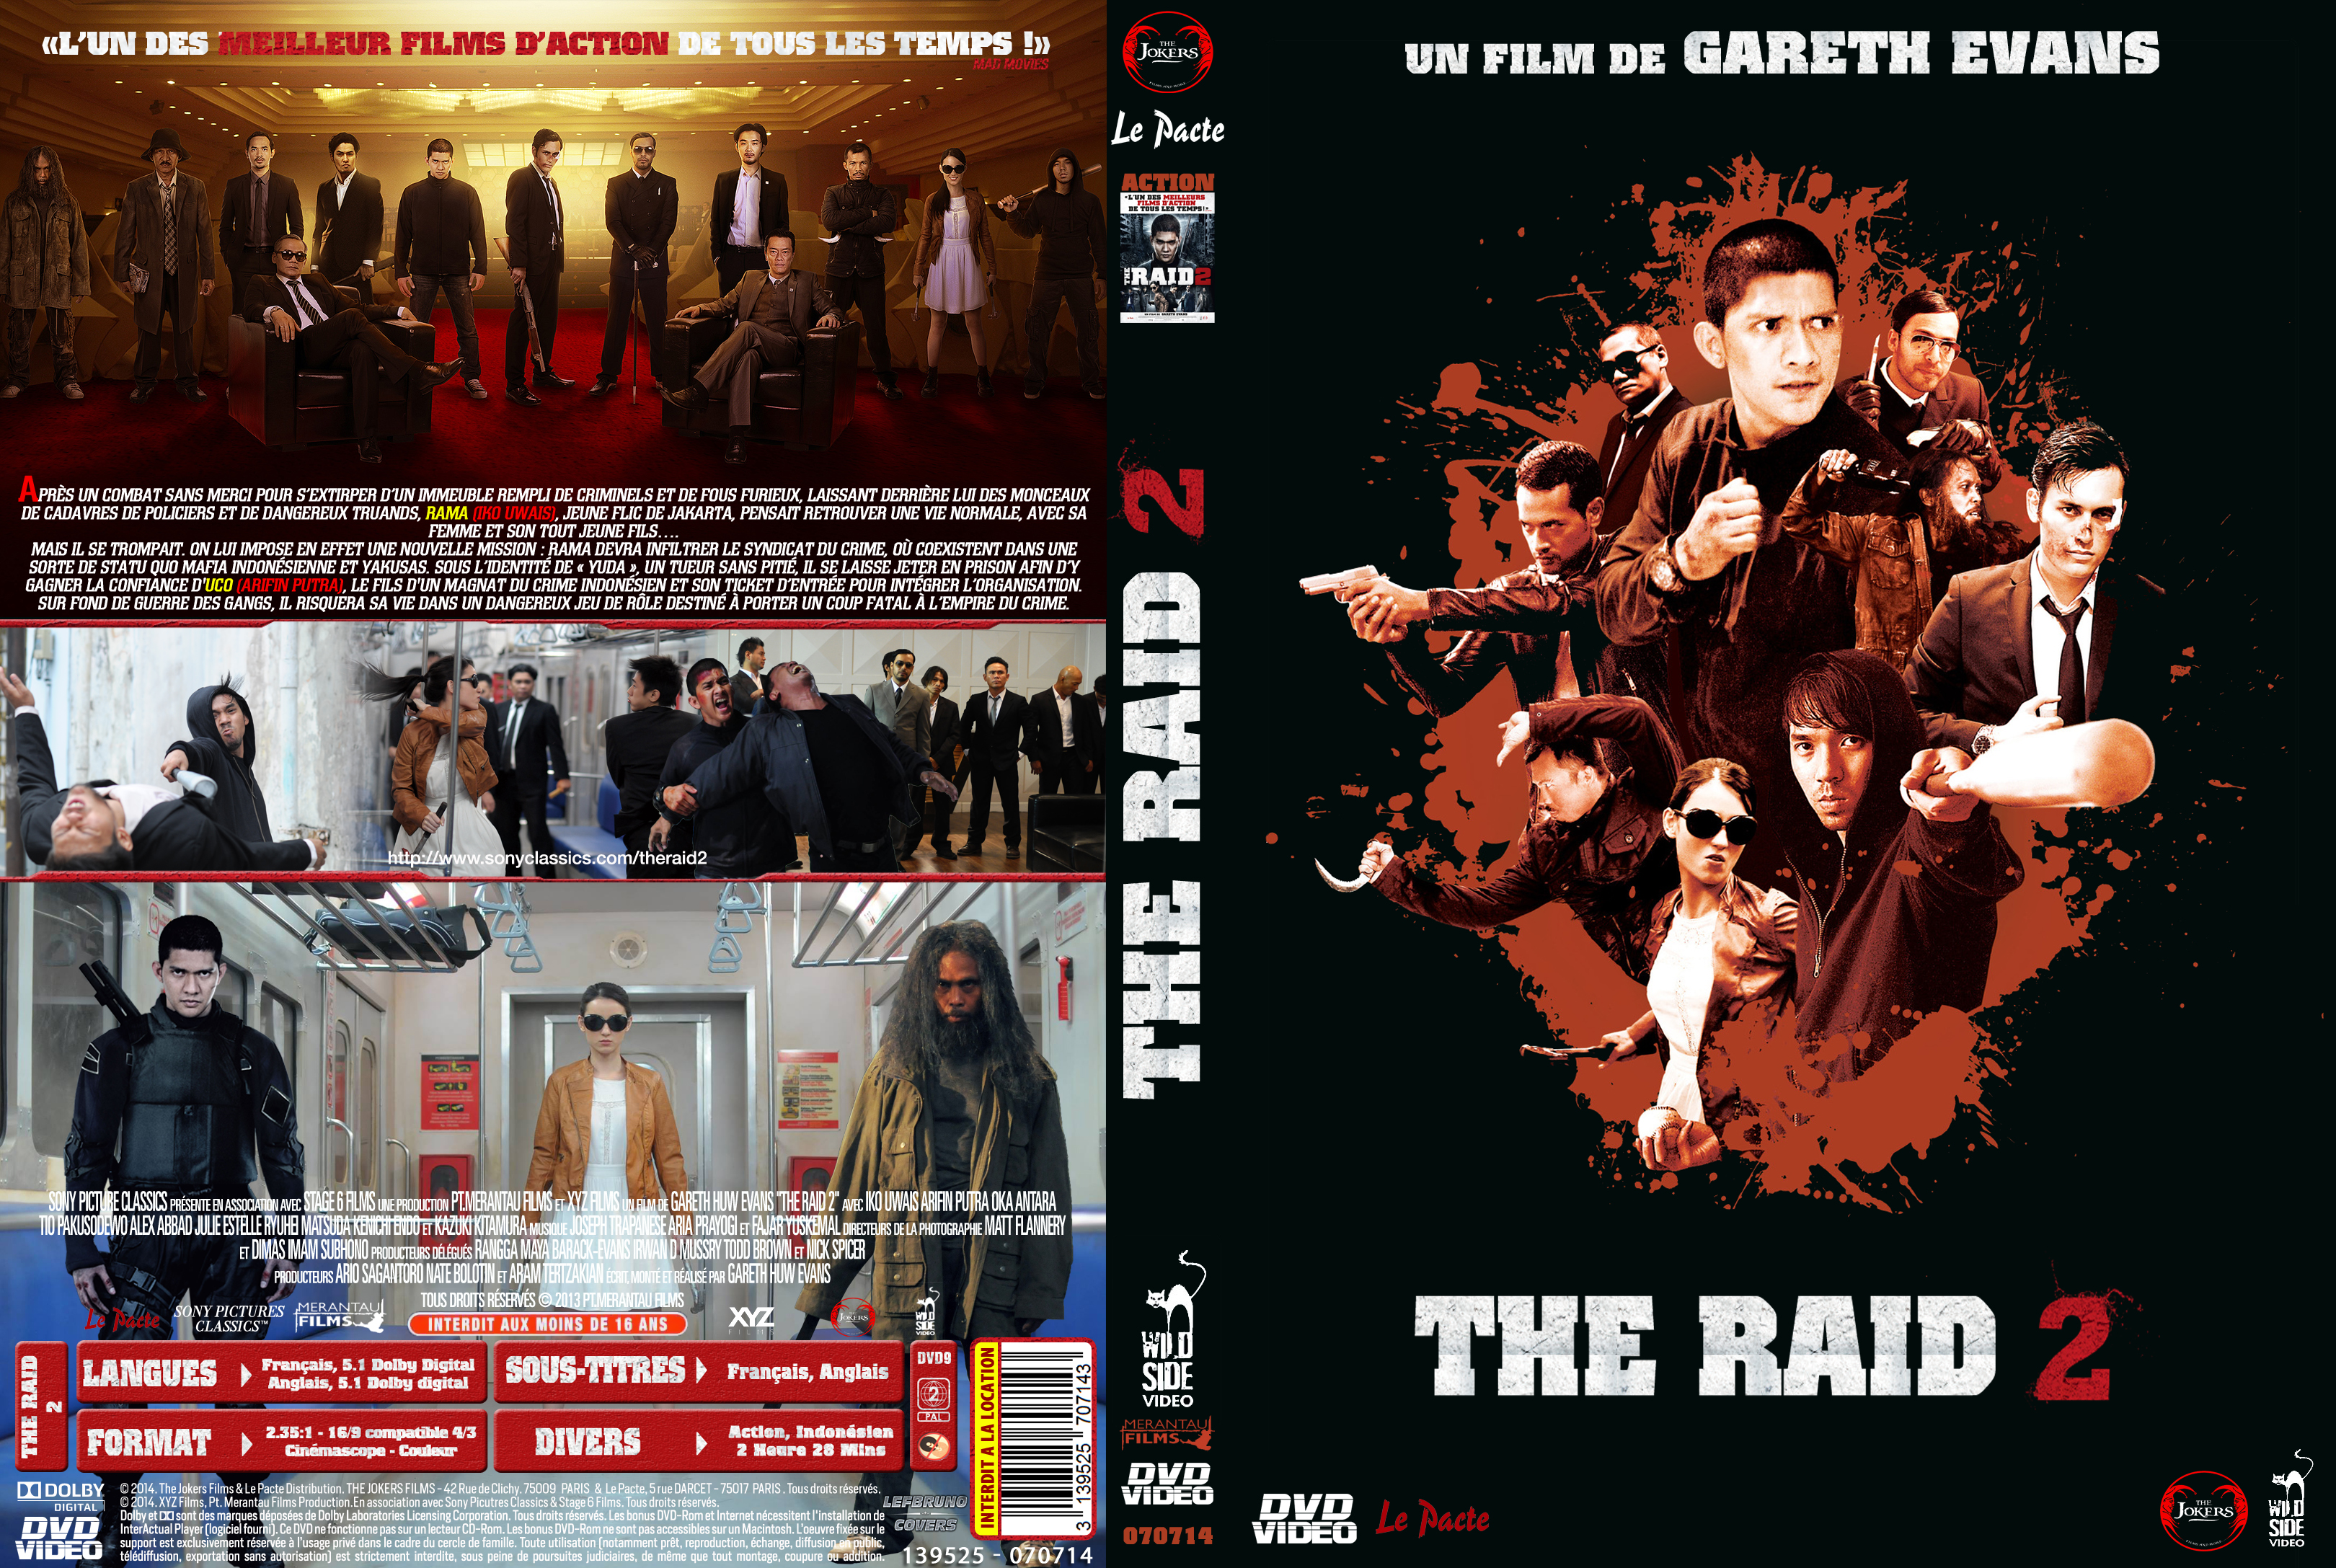 Jaquette DVD The Raid 2 custom